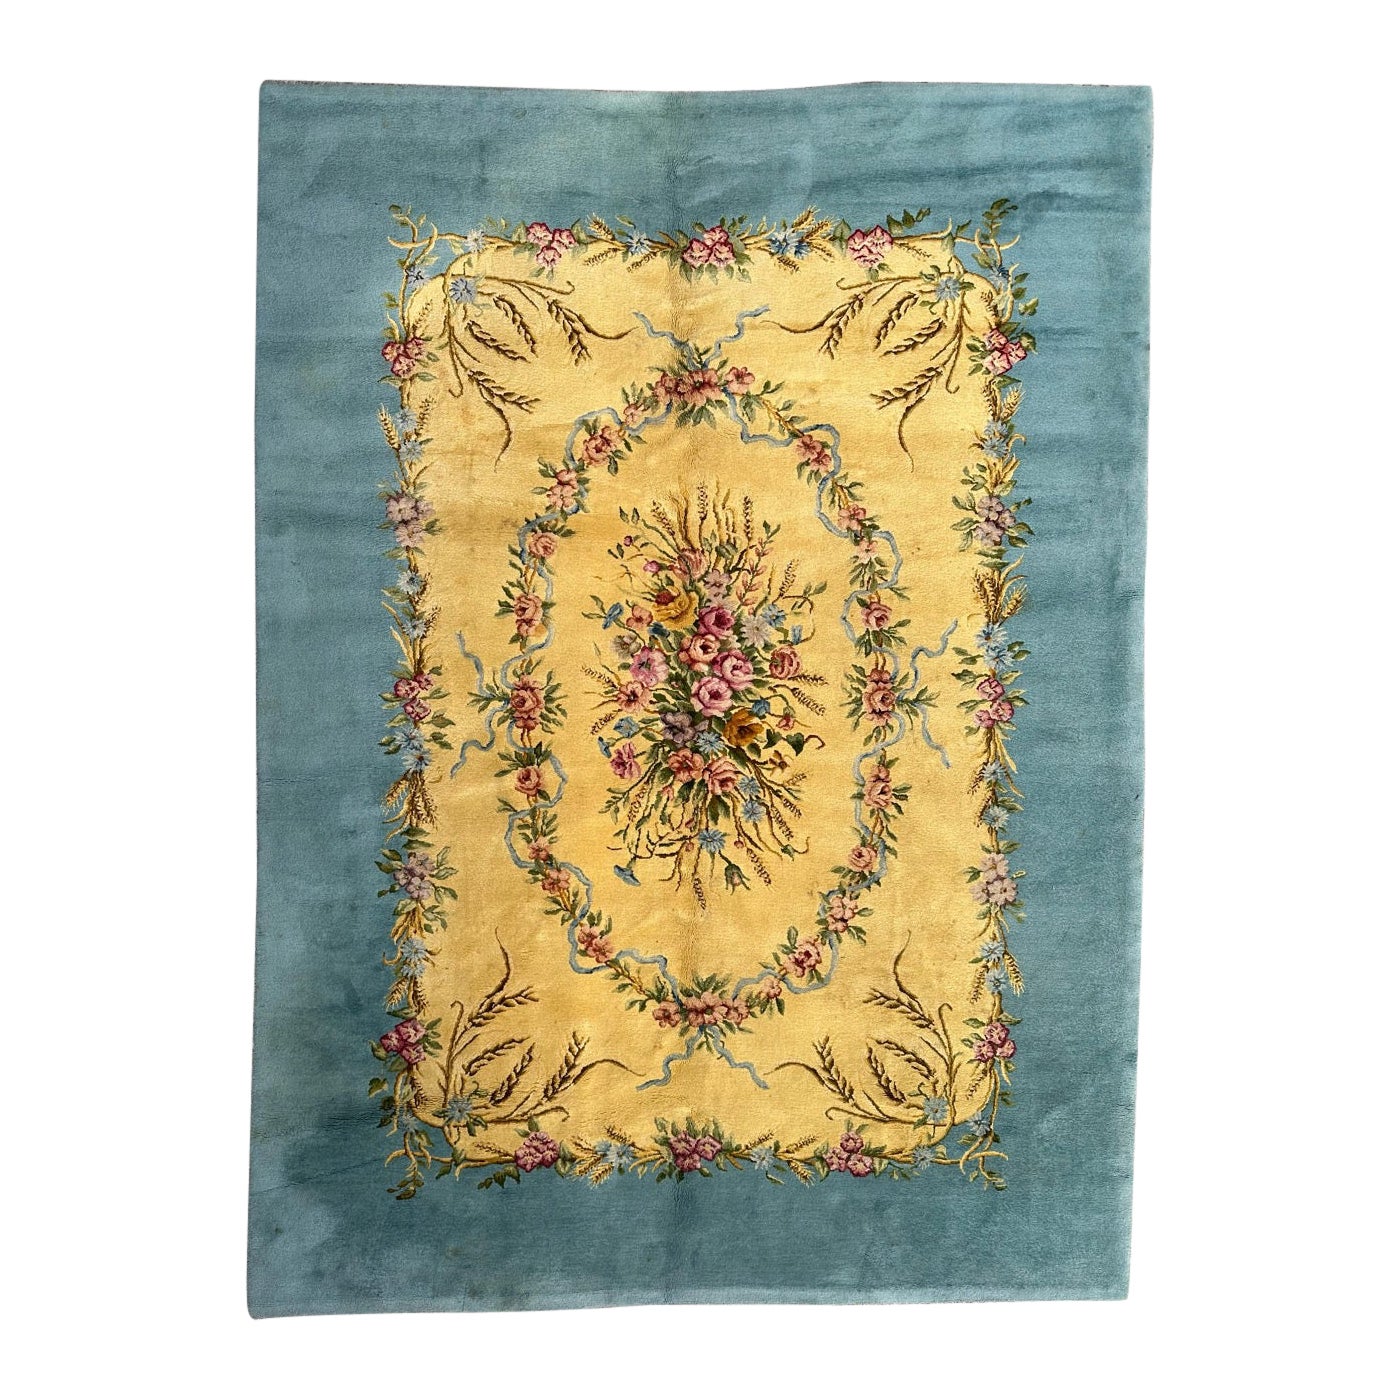 Bobyrug’s Wonderful large antique fine french savonnerie rug